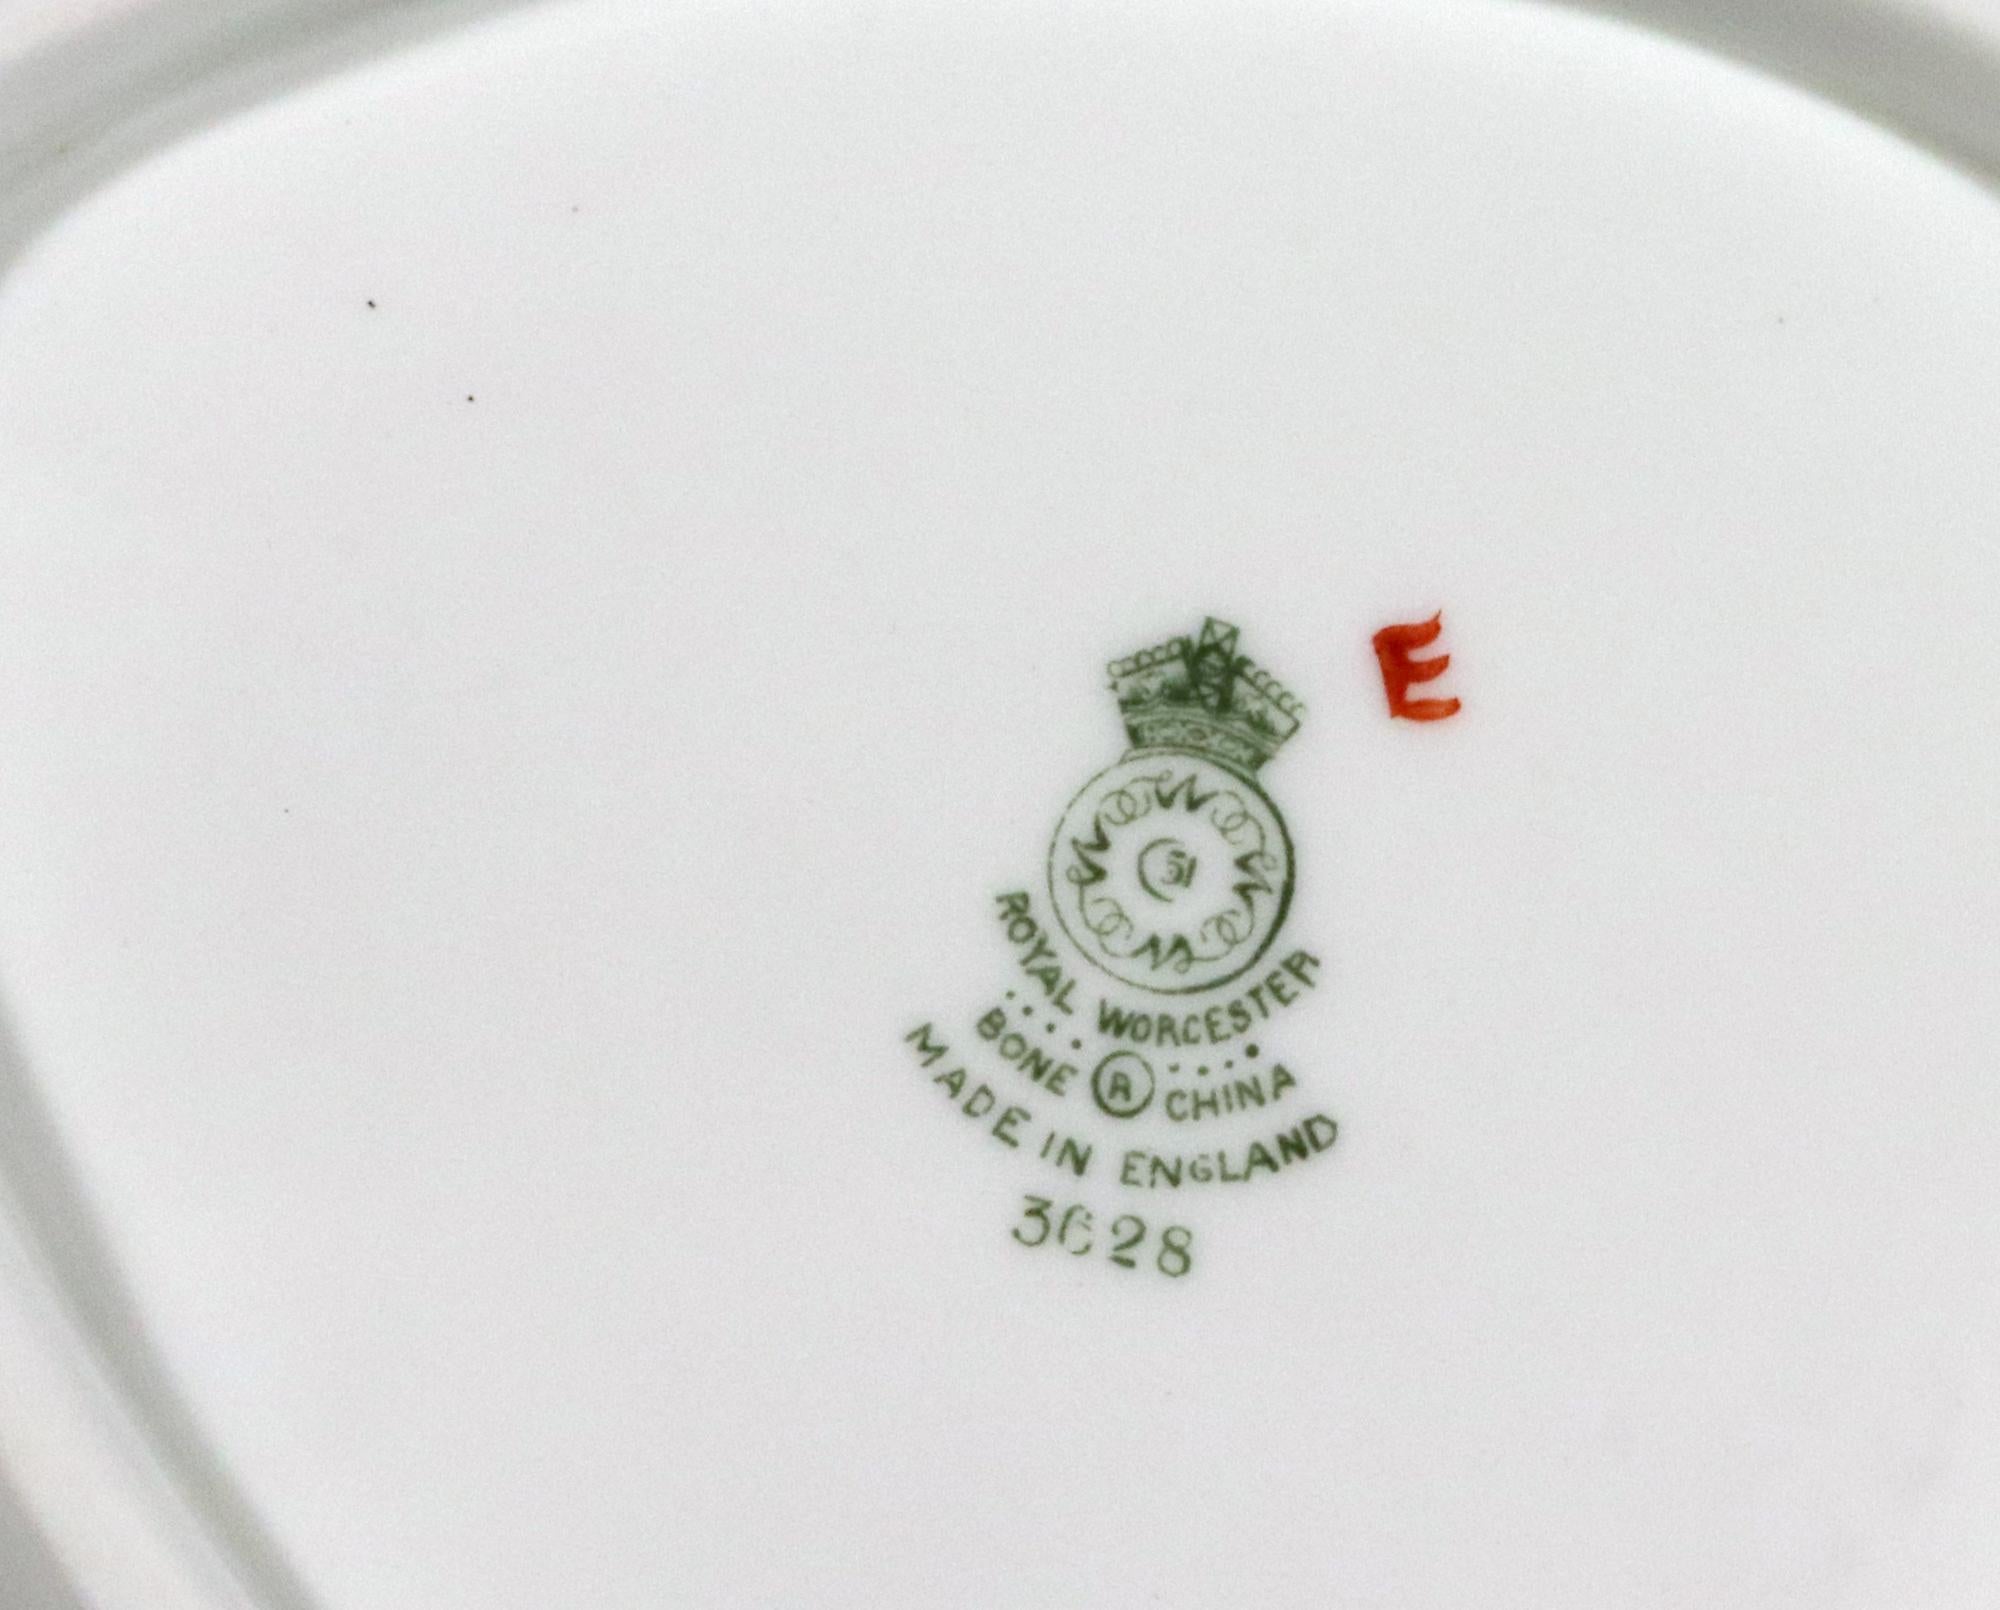 Georgian Royal Worcester Bone China Porcelain Leaf-shaped Dishes, Pattern 3628 For Sale